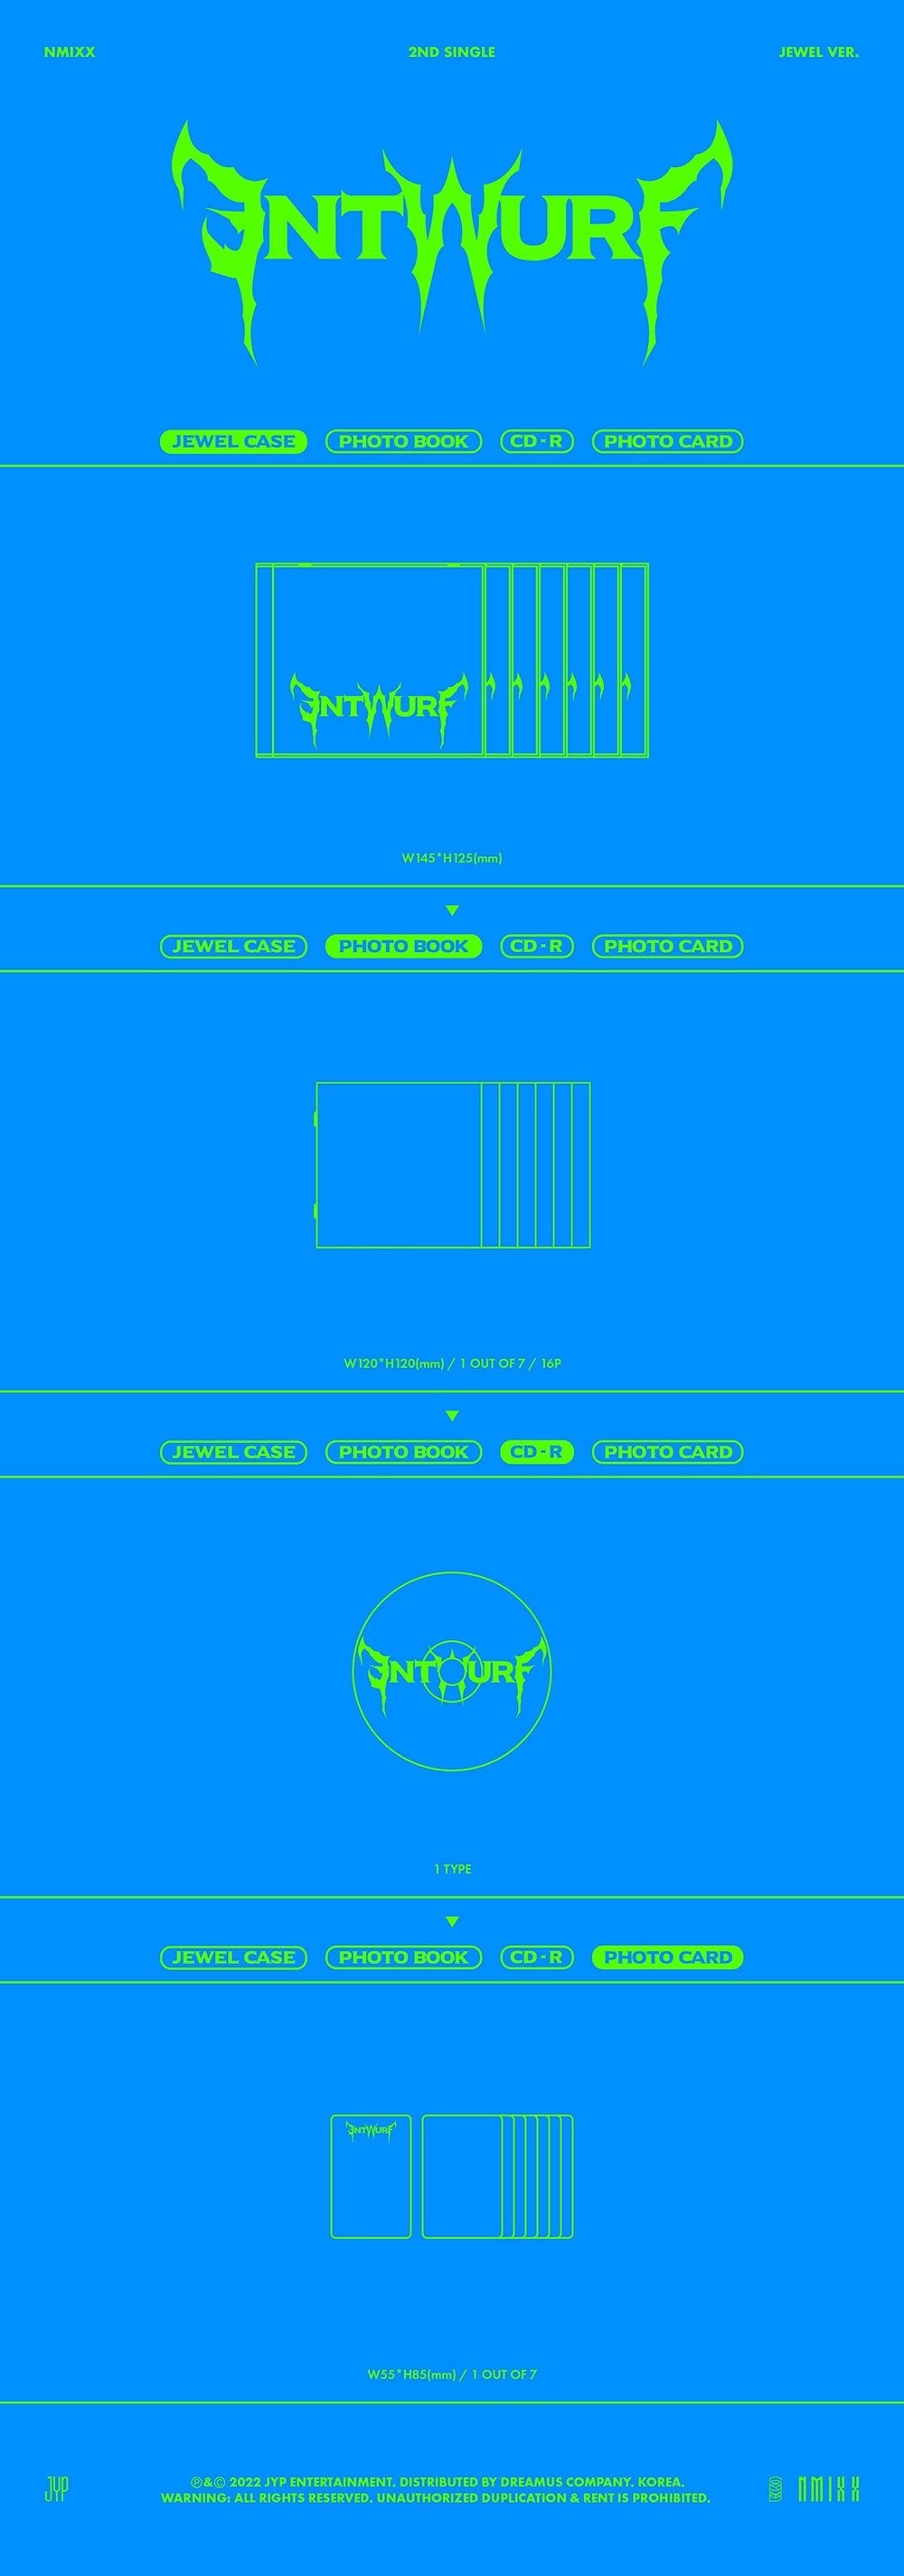 NMIXX - ENTWURF (2nd Single Album) Jewel Case Ver.